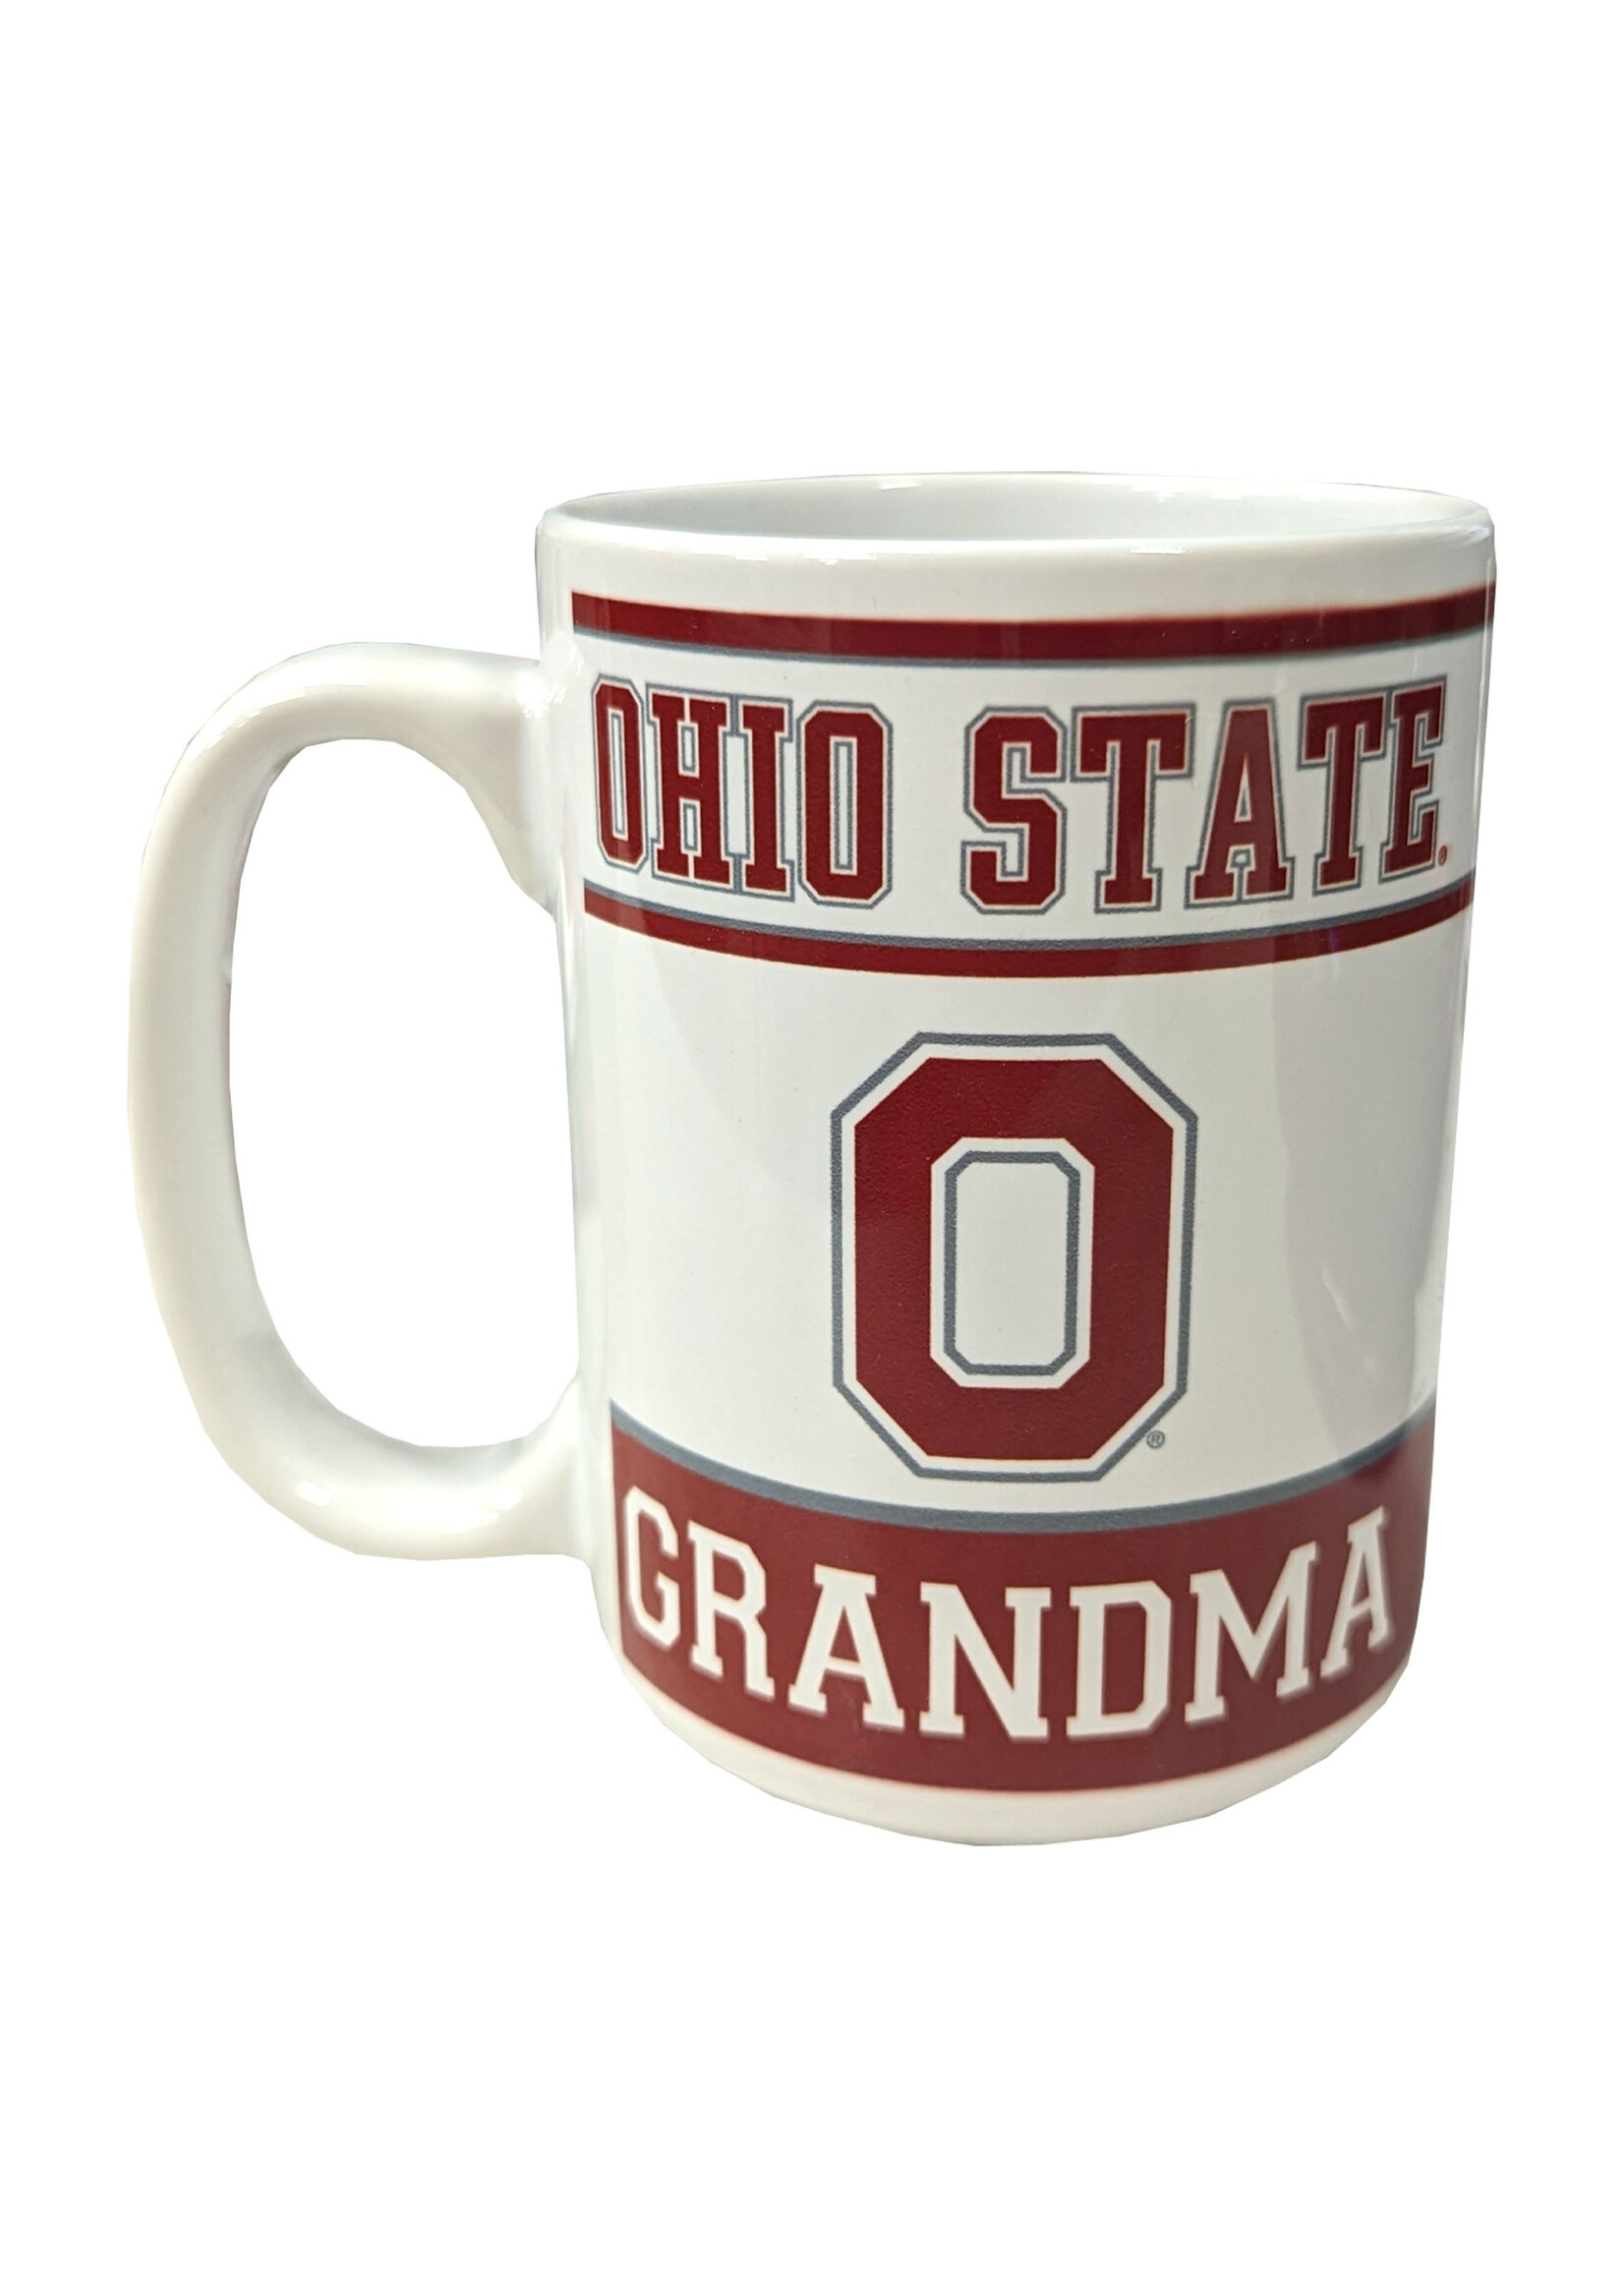 Ohio State Buckeyes 15oz. Grandma Mug